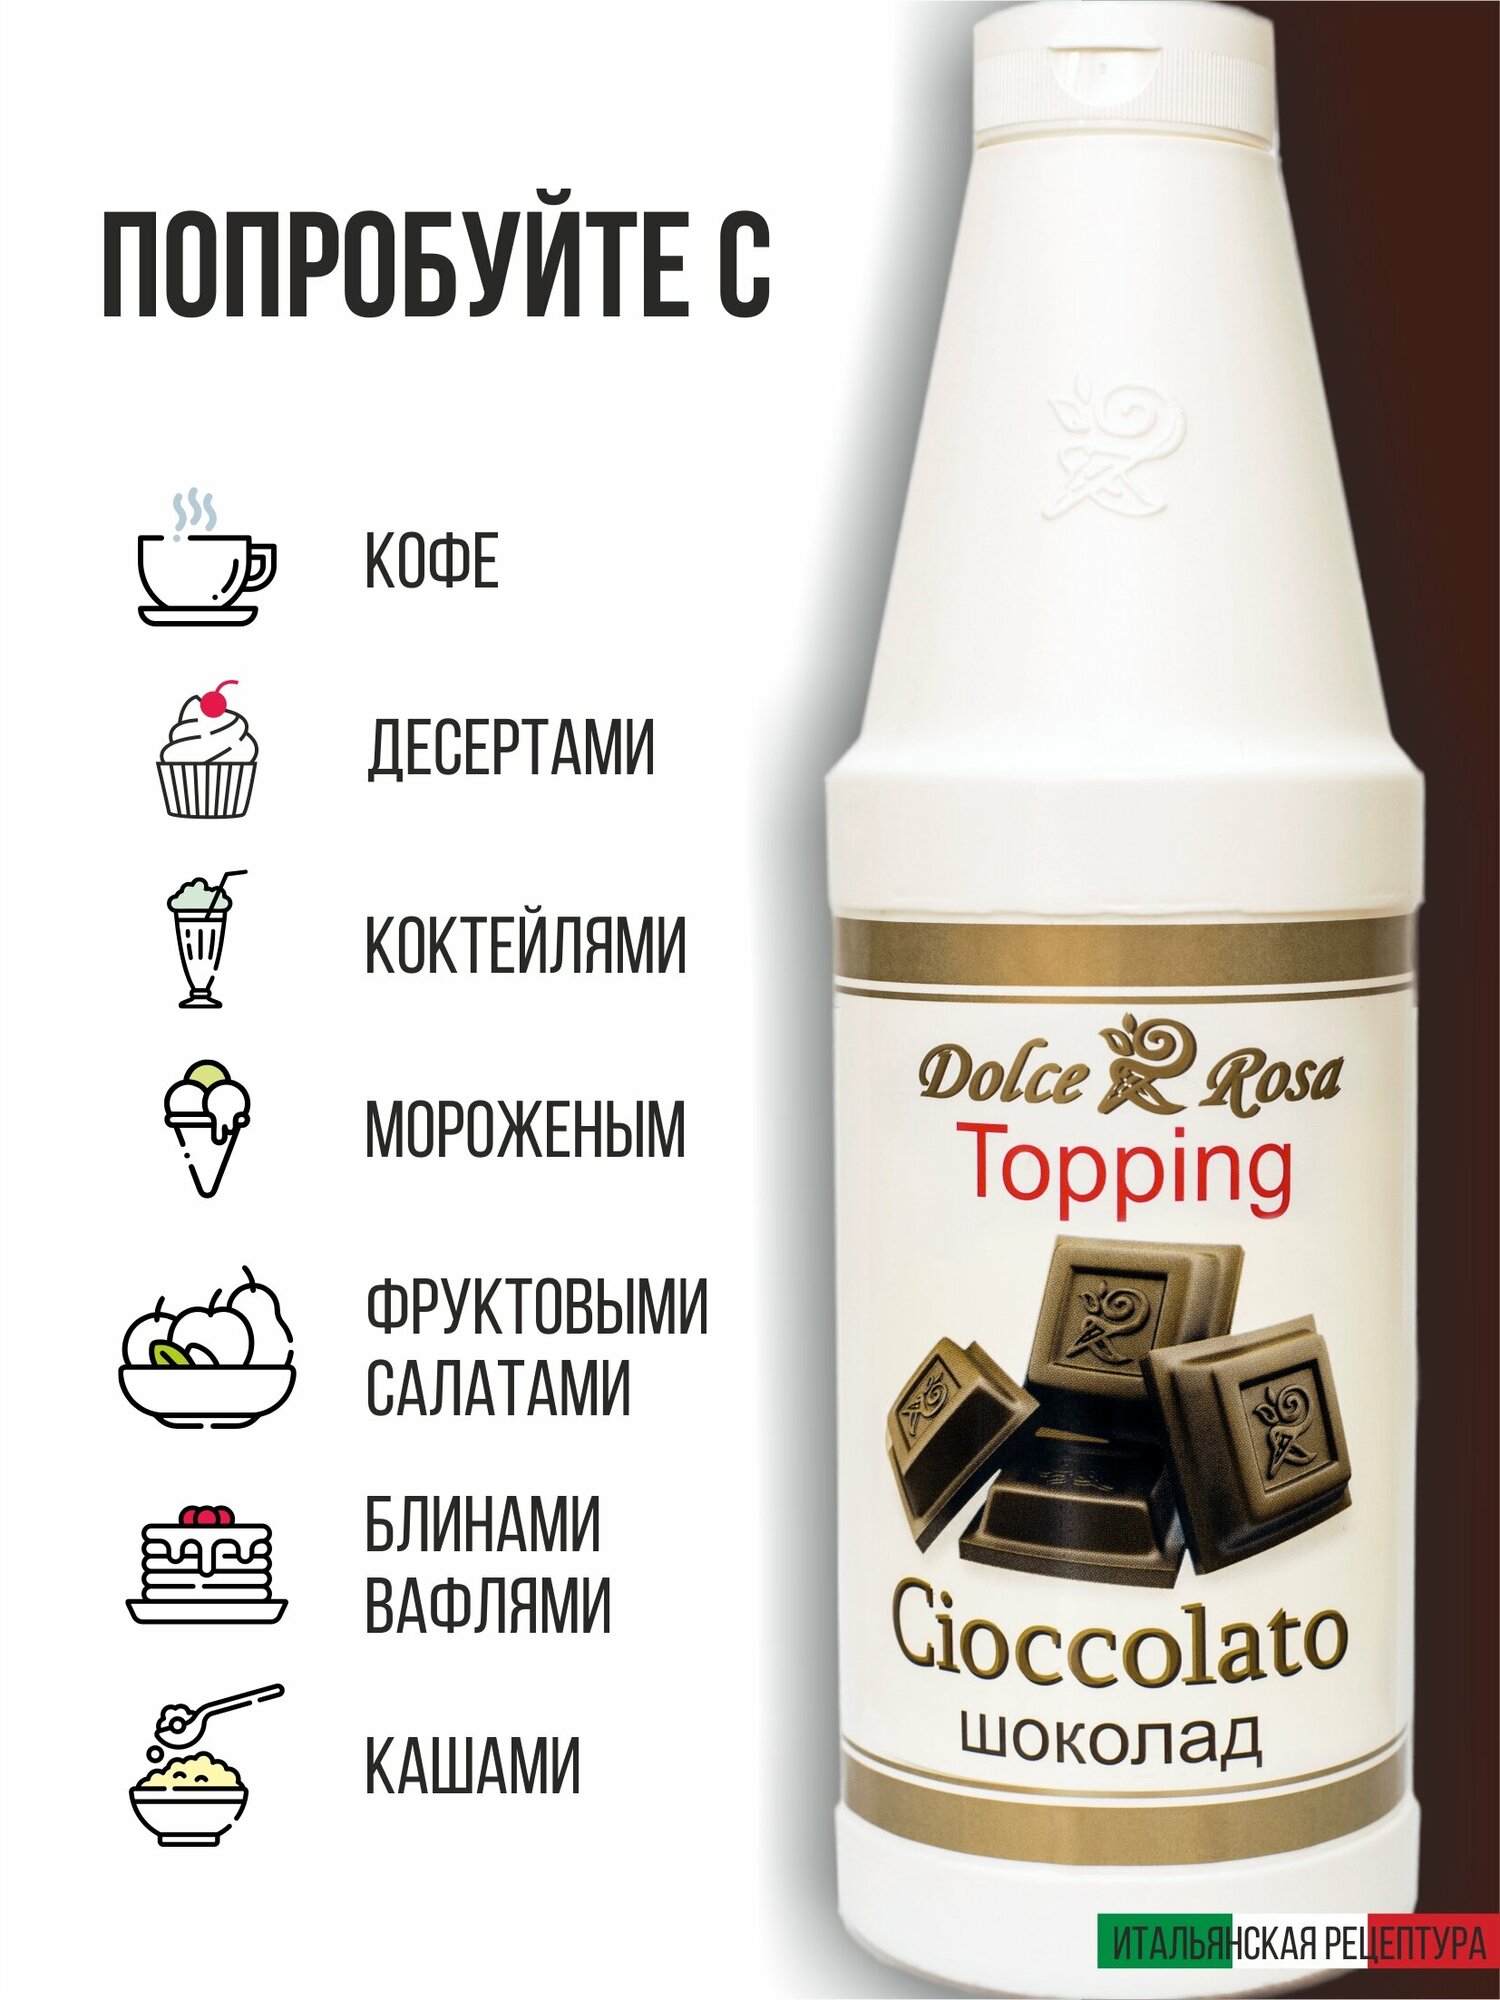 Топпинг сироп шоколад для кофе мороженого, 1 кг